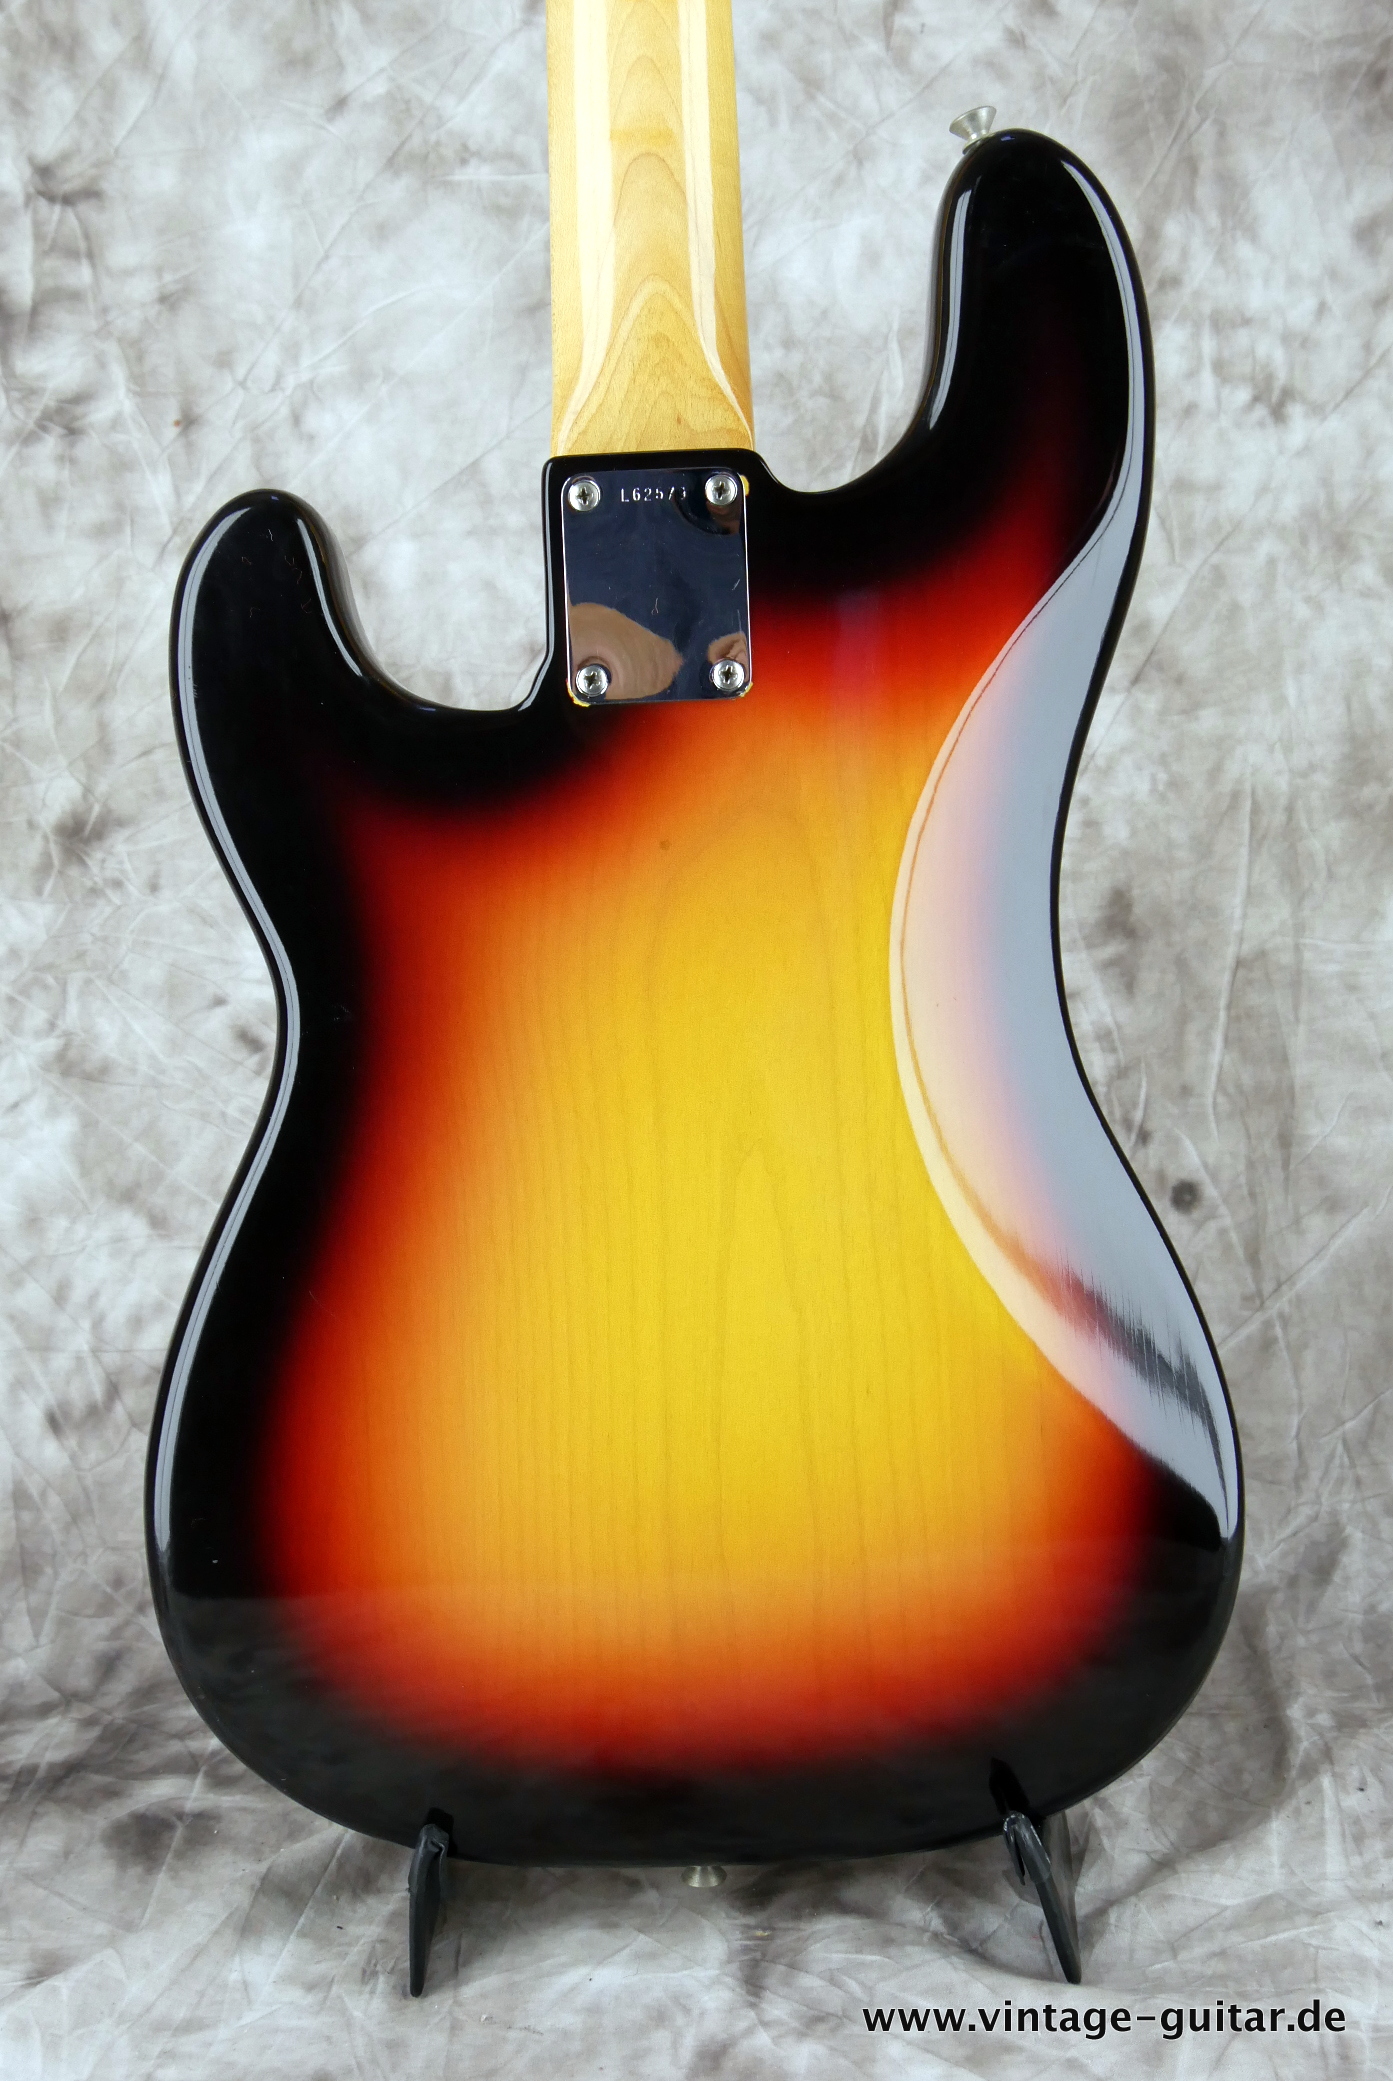 Fender-Precision-Bass-1965-sunburst-mint-condition-004.JPG